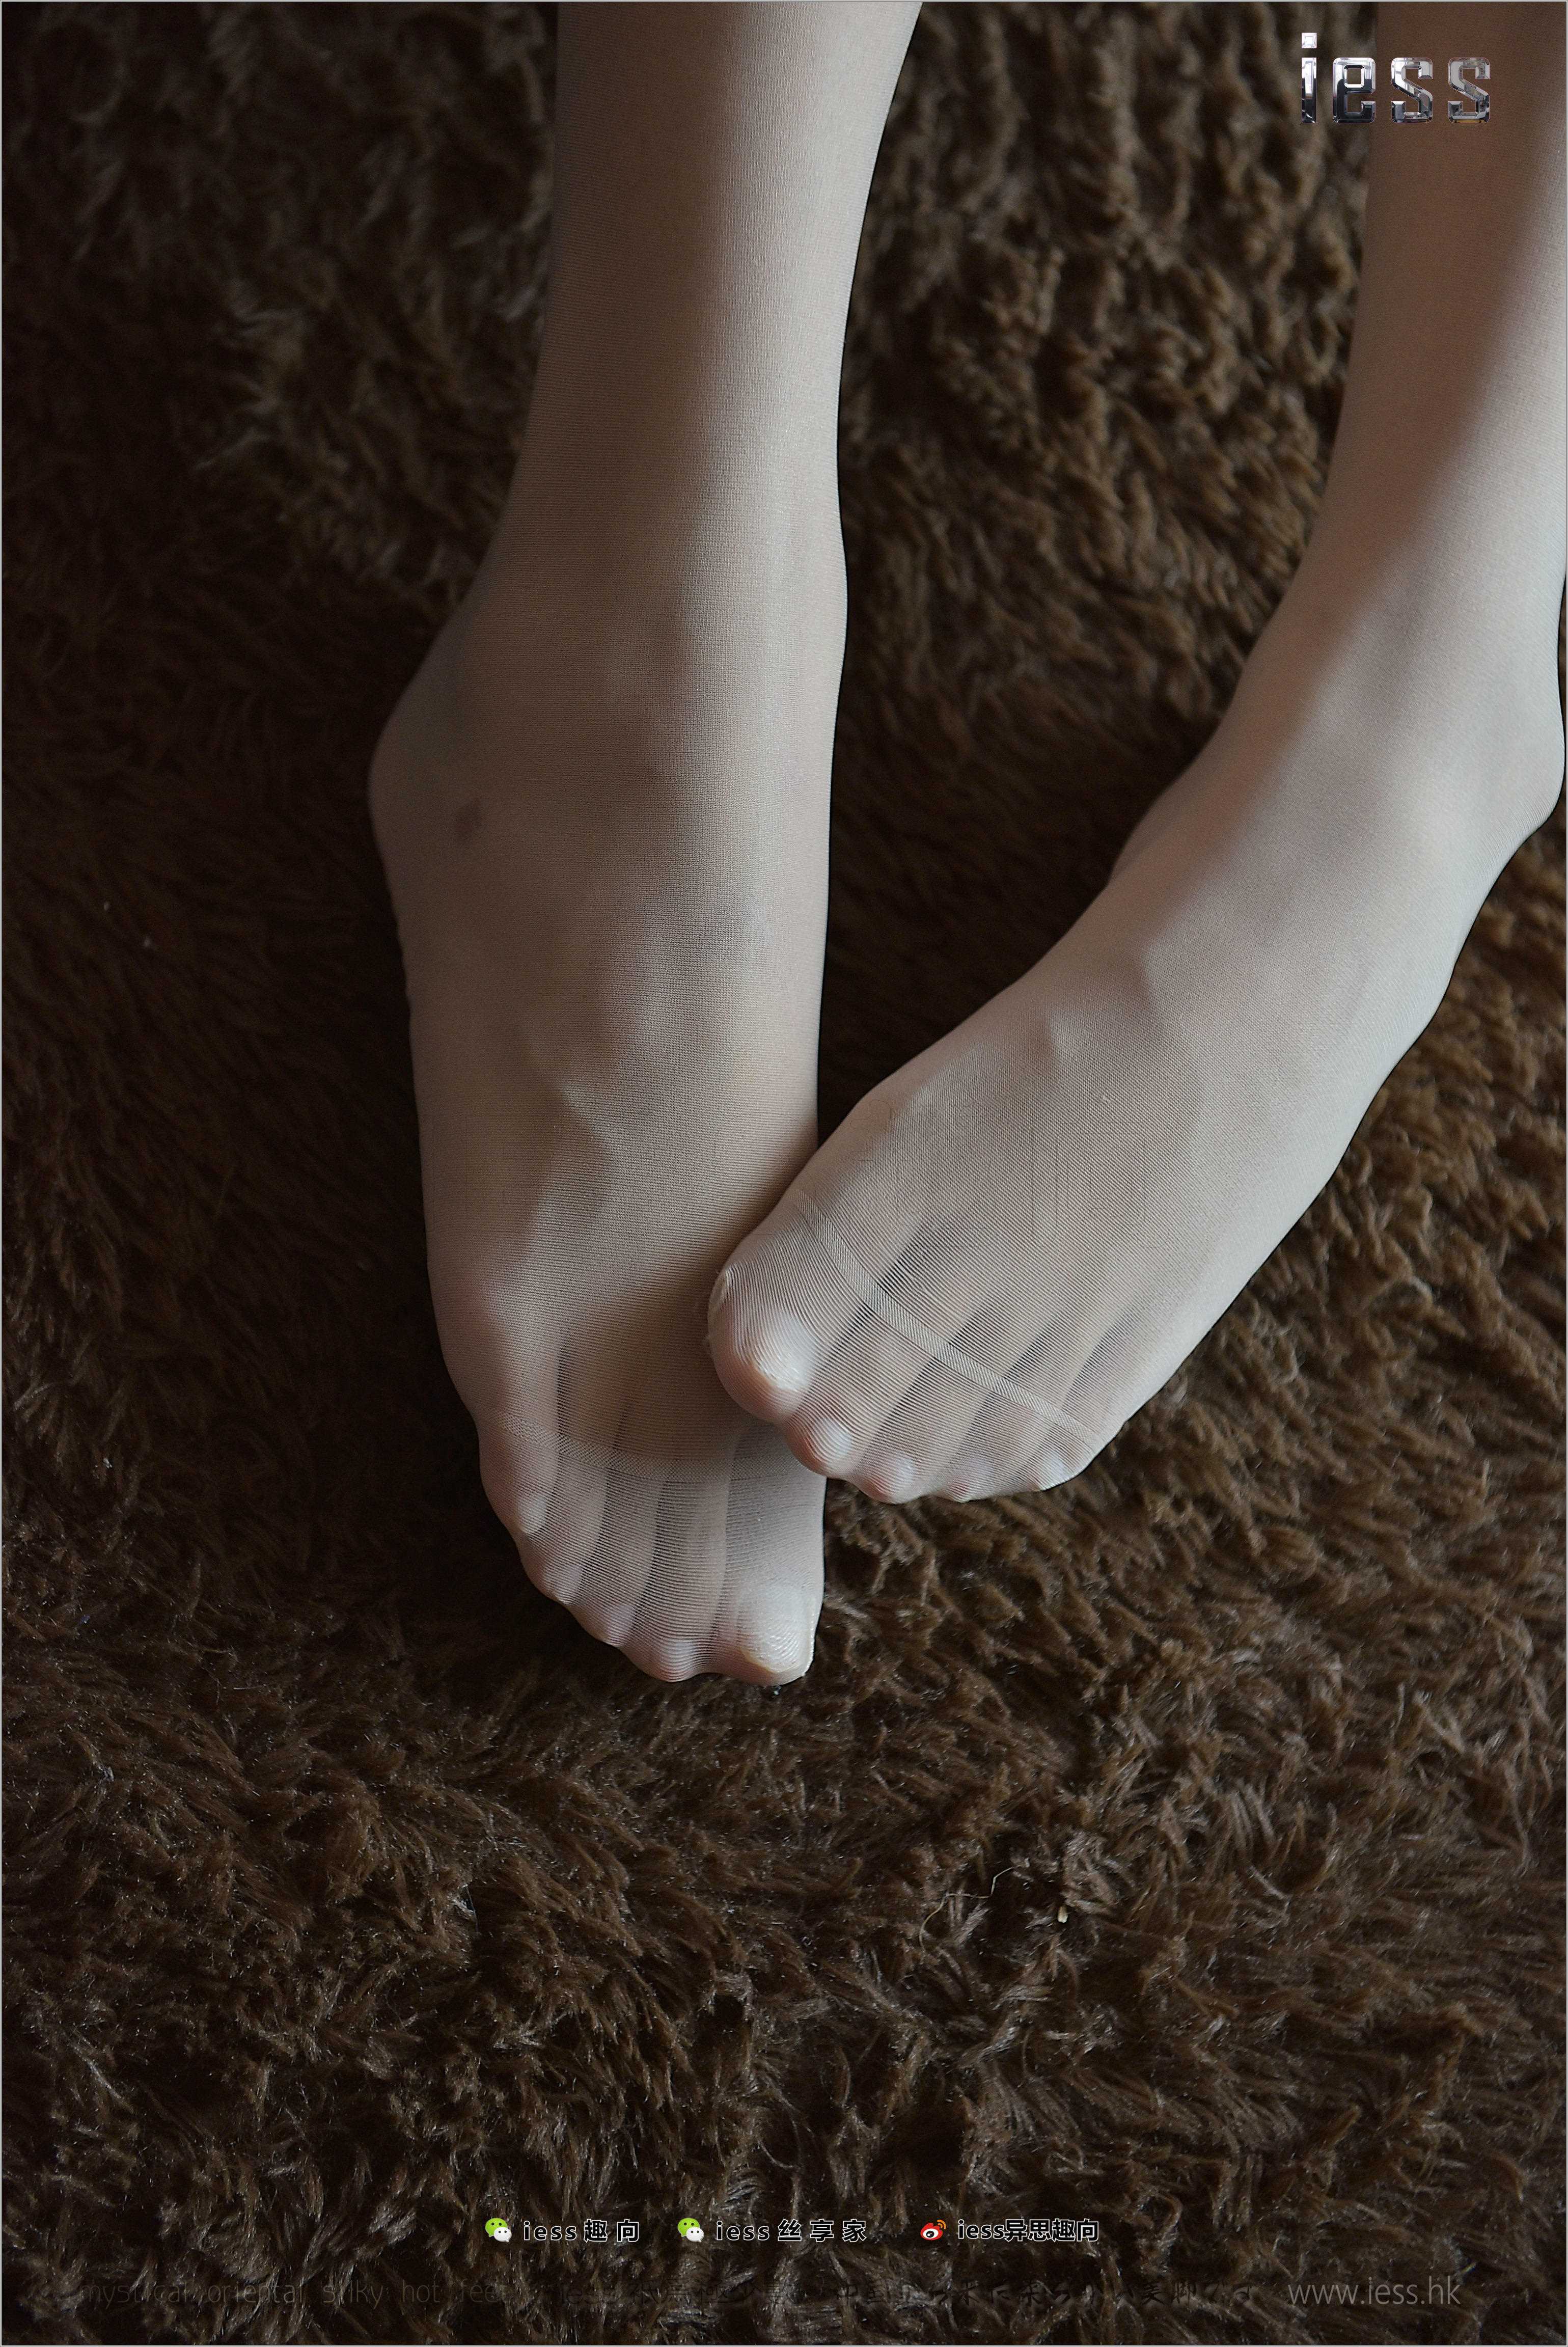 China Beauty Legs and feet 246